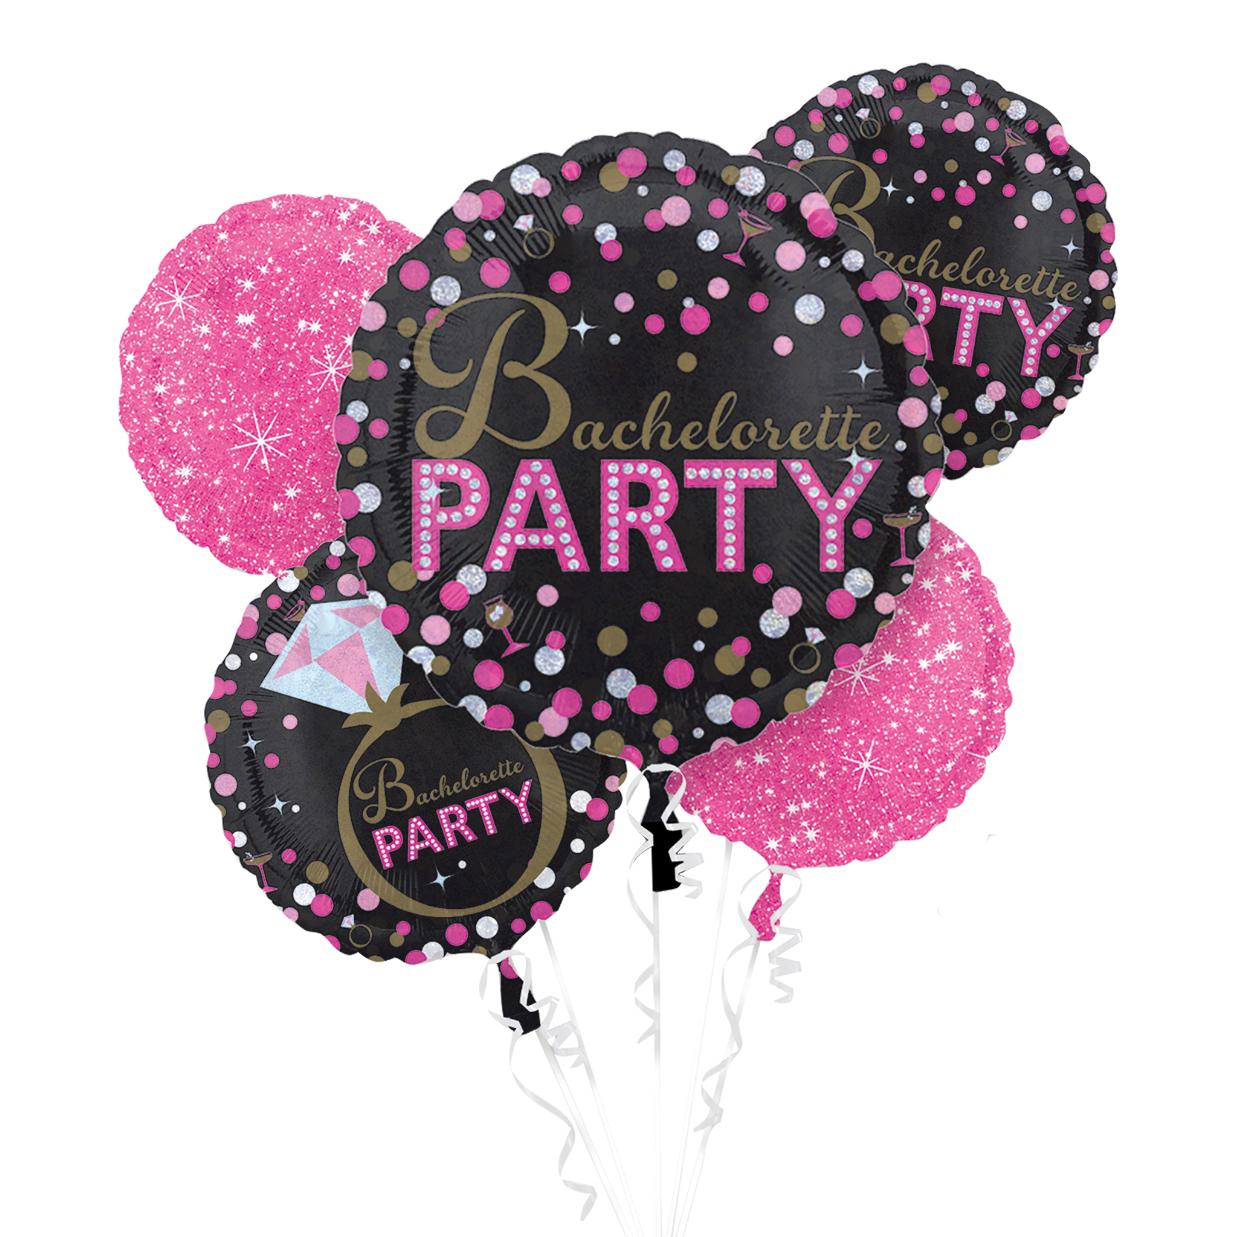 Bachelorette Sassy Party Balloon Bouquet 5pcs Balloons & Streamers - Party Centre - Party Centre